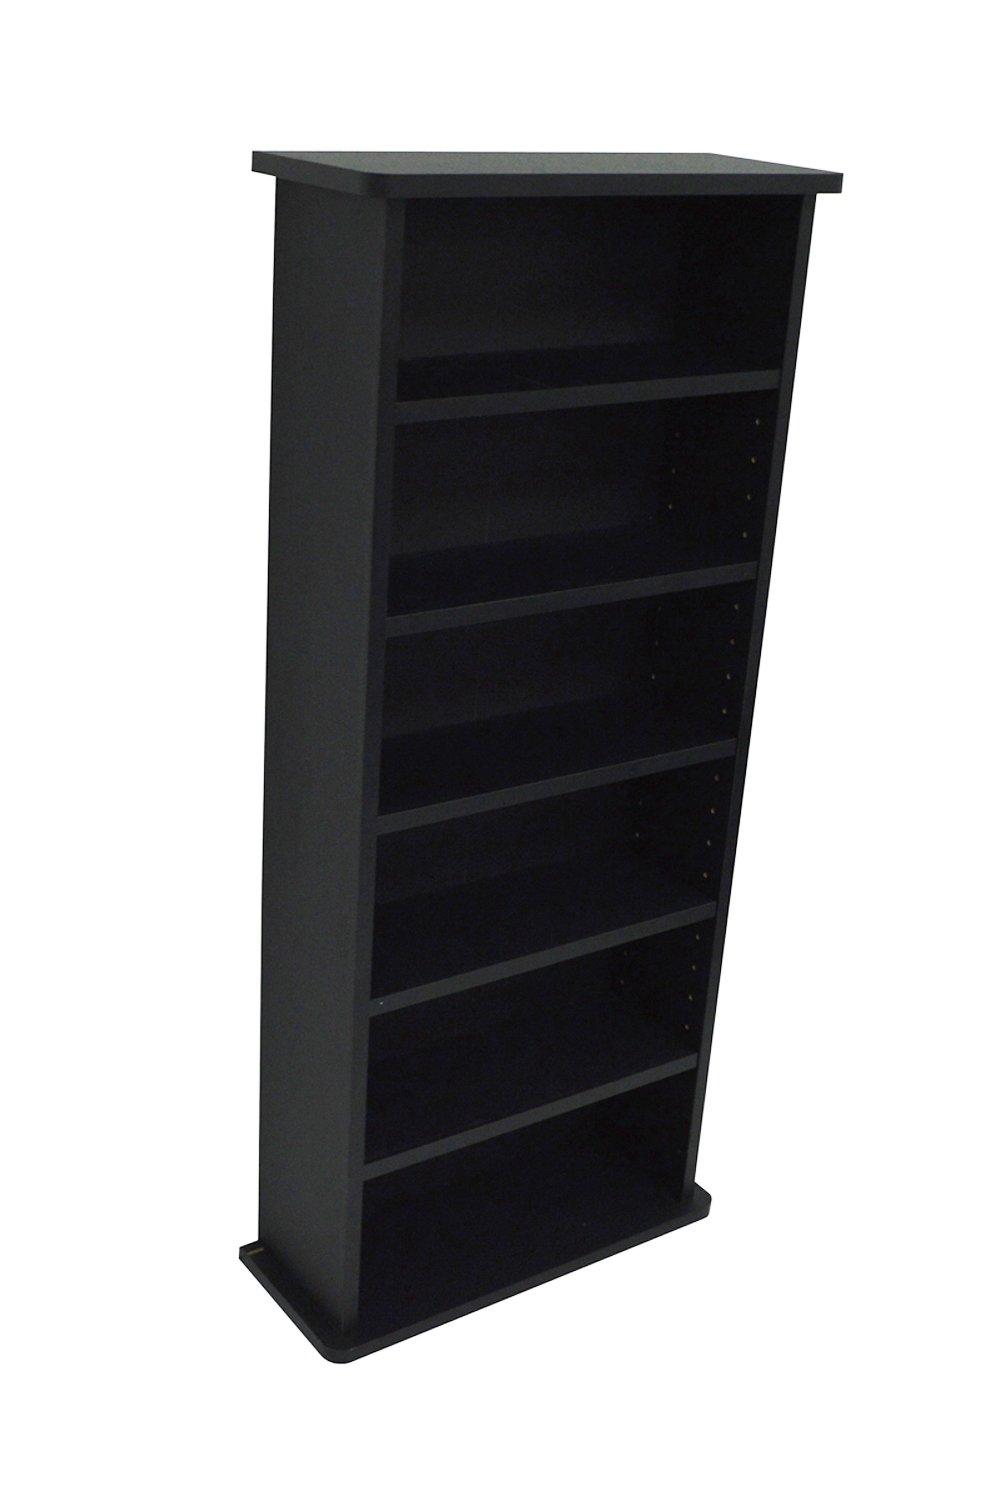 'Chak' -  222 Cd Or 104 Dvd Blu-ray Media Storage Shelf Unit - Black